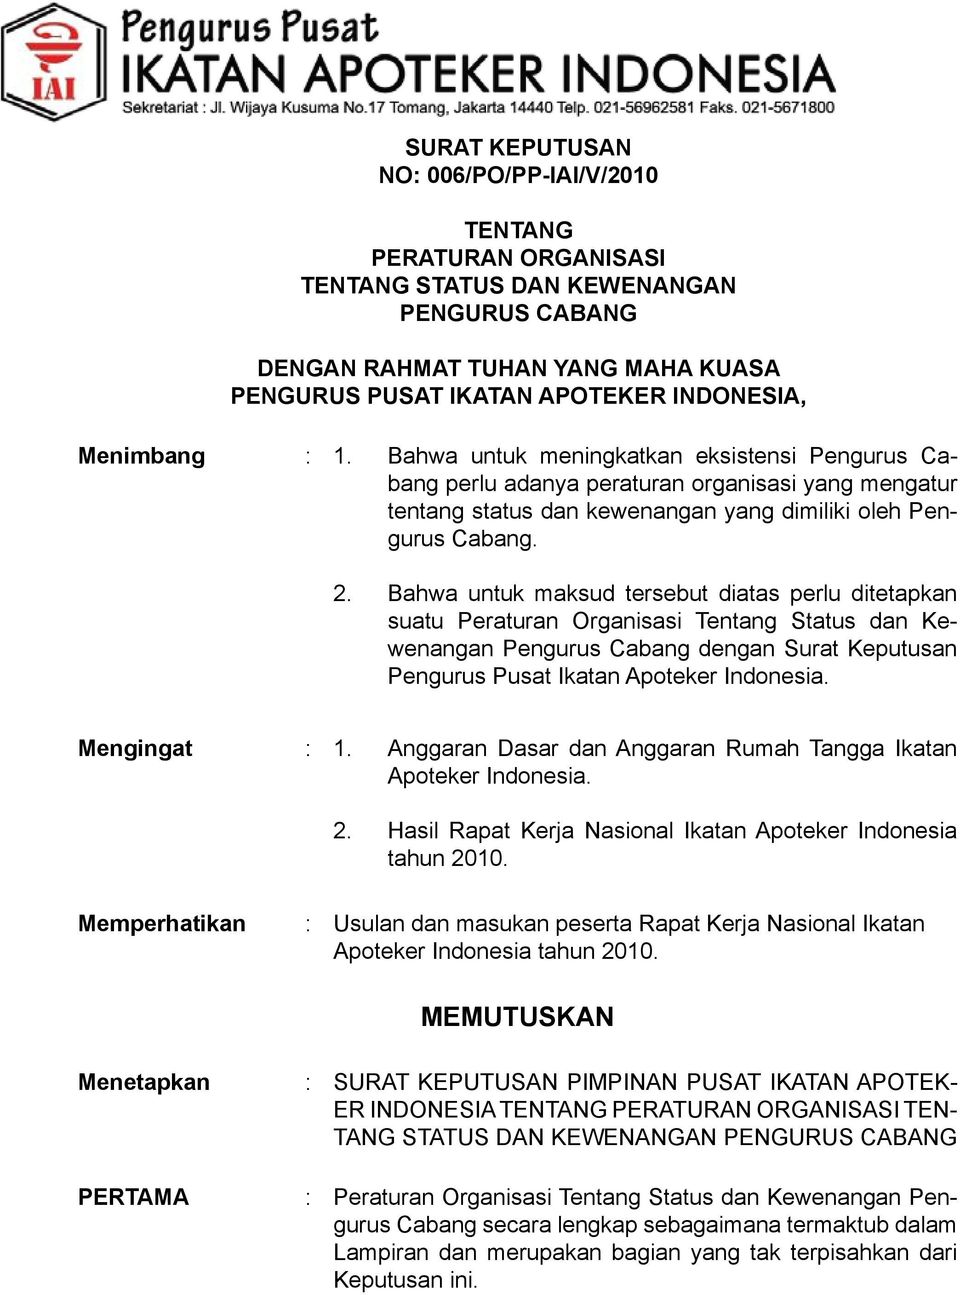 Bahwa untuk maksud tersebut diatas perlu ditetapkan suatu Peraturan Organisasi Tentang Status dan Kewenangan Pengurus Cabang dengan Surat Keputusan Pengurus Pusat Ikatan Apoteker Indonesia.